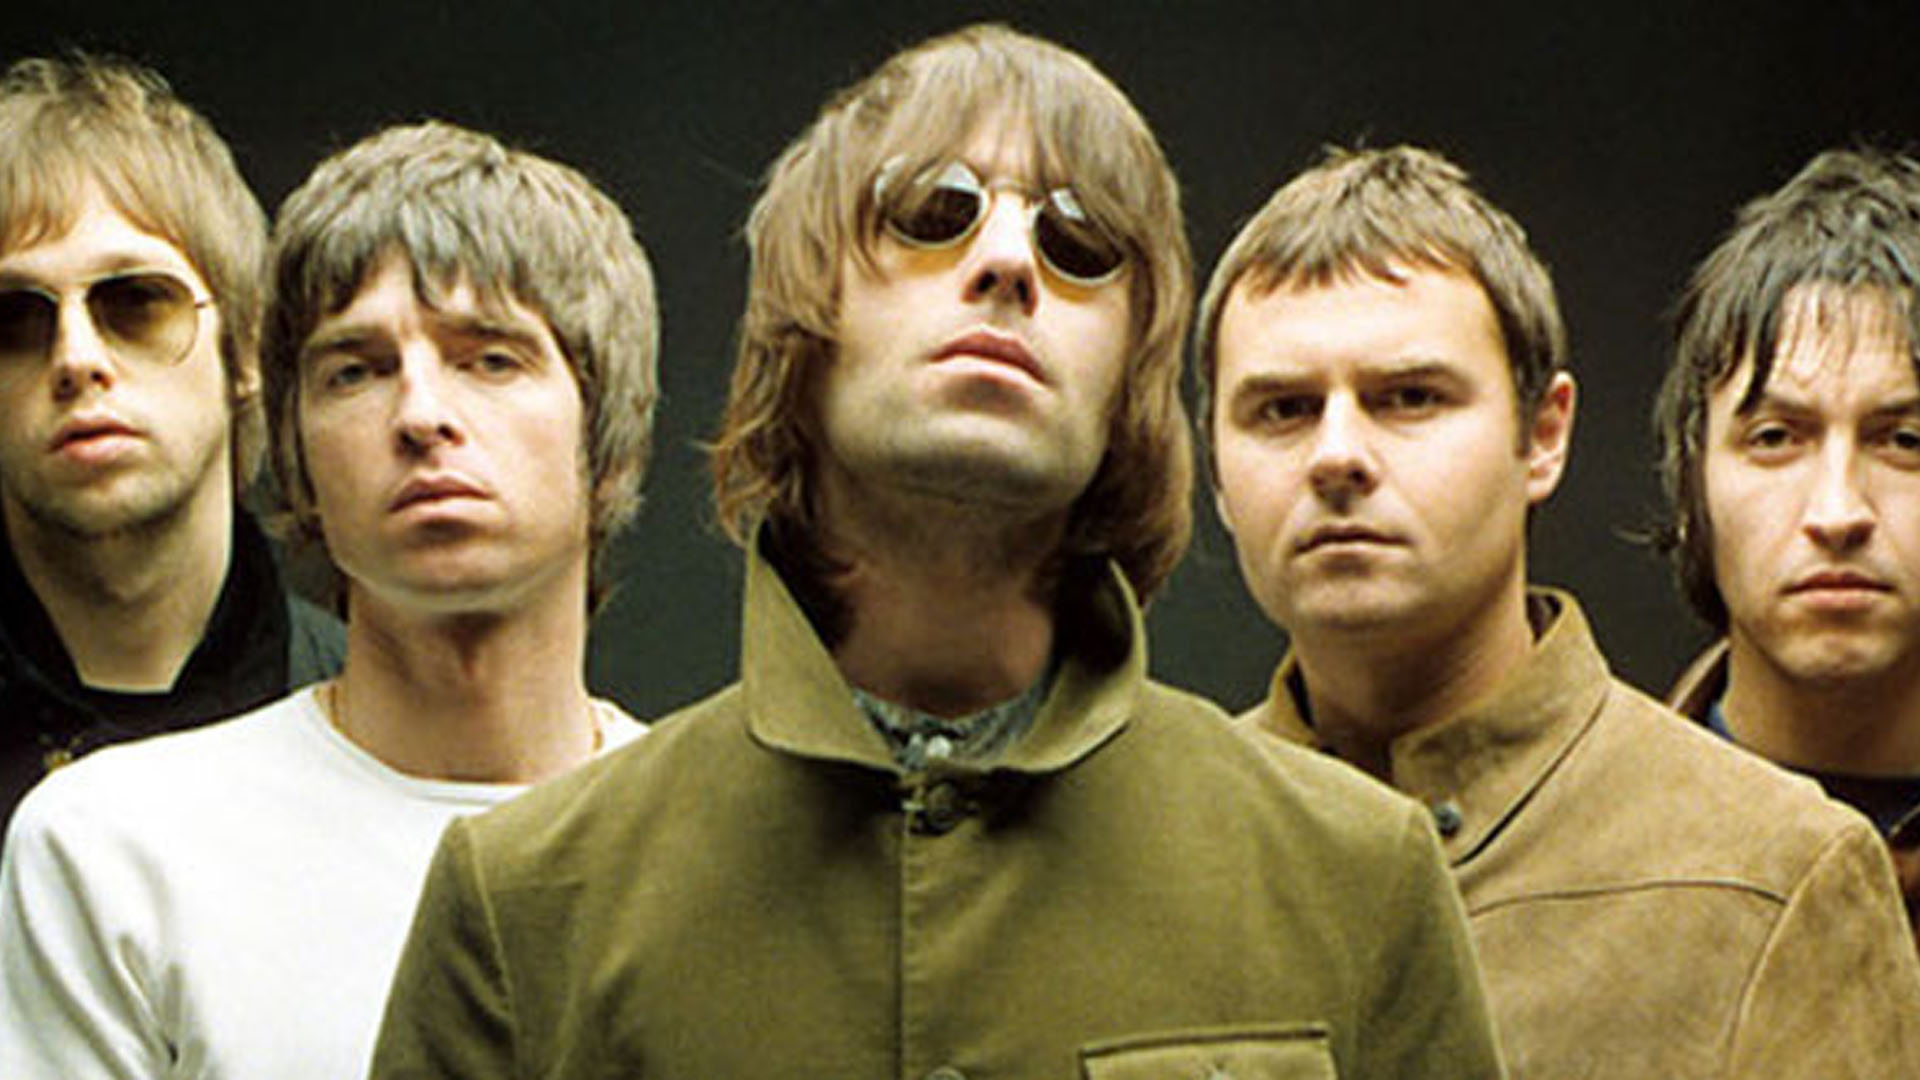 Oasis. Supersonic. Documental. Hermanos Gallagher. Cúsica Plus